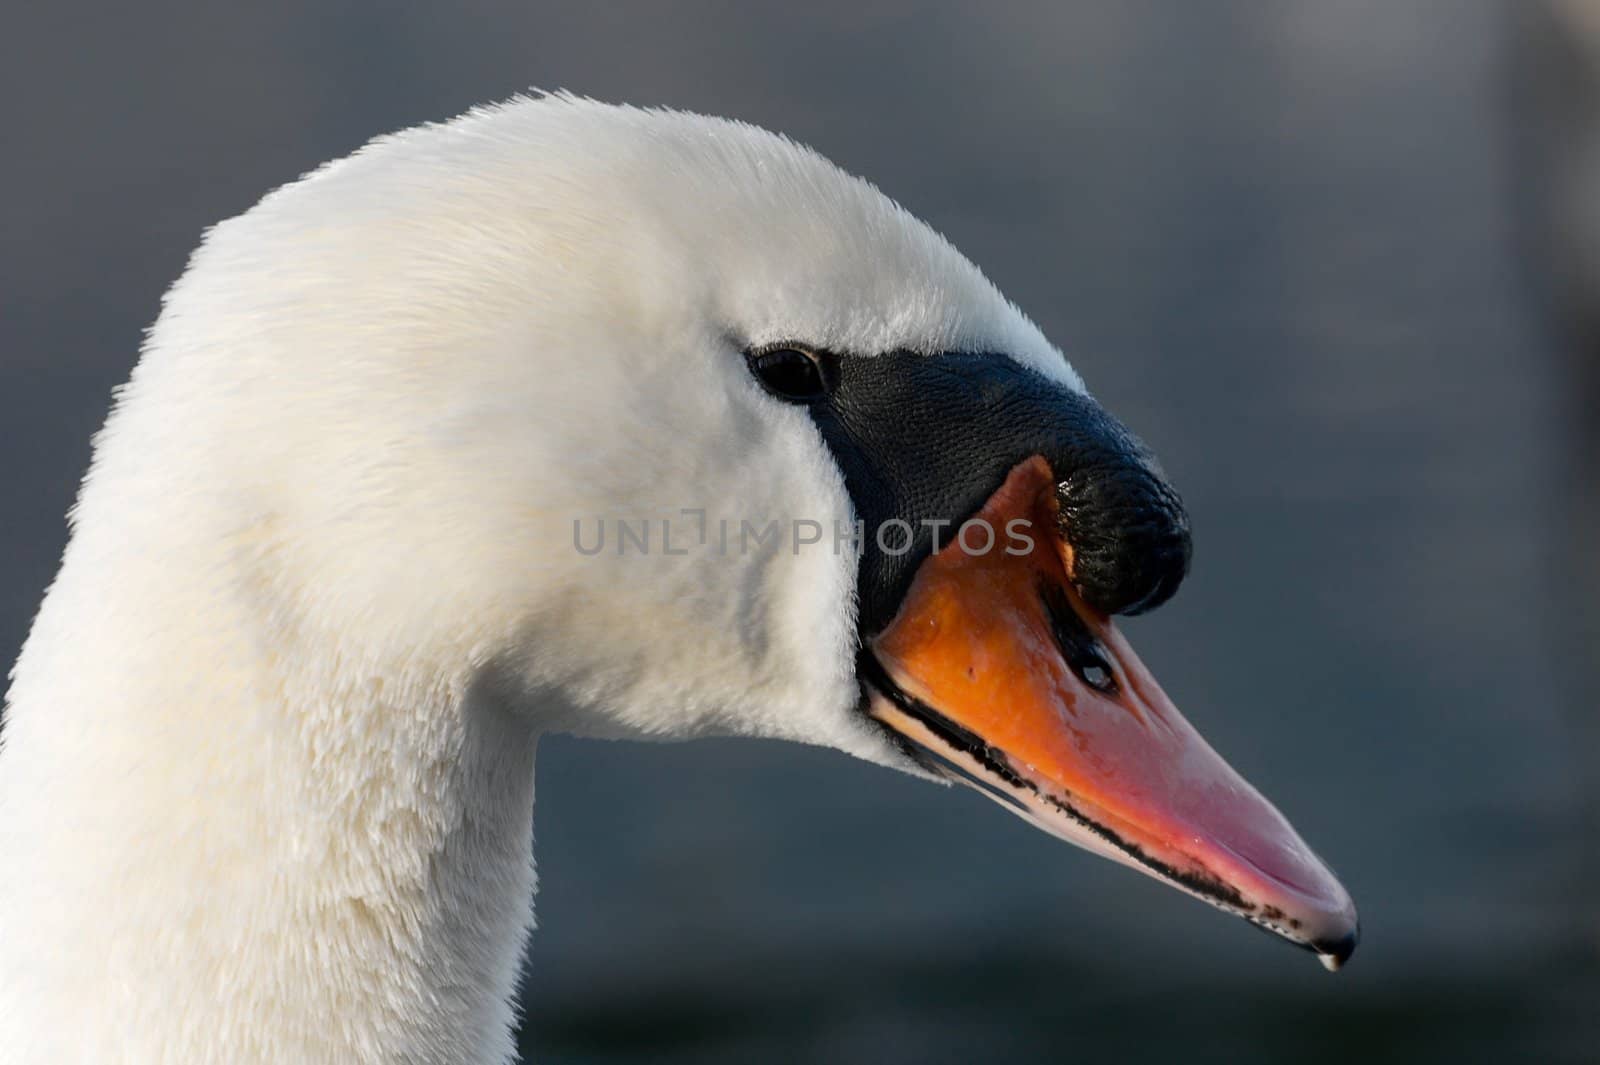 Closeup portrait if a white swan